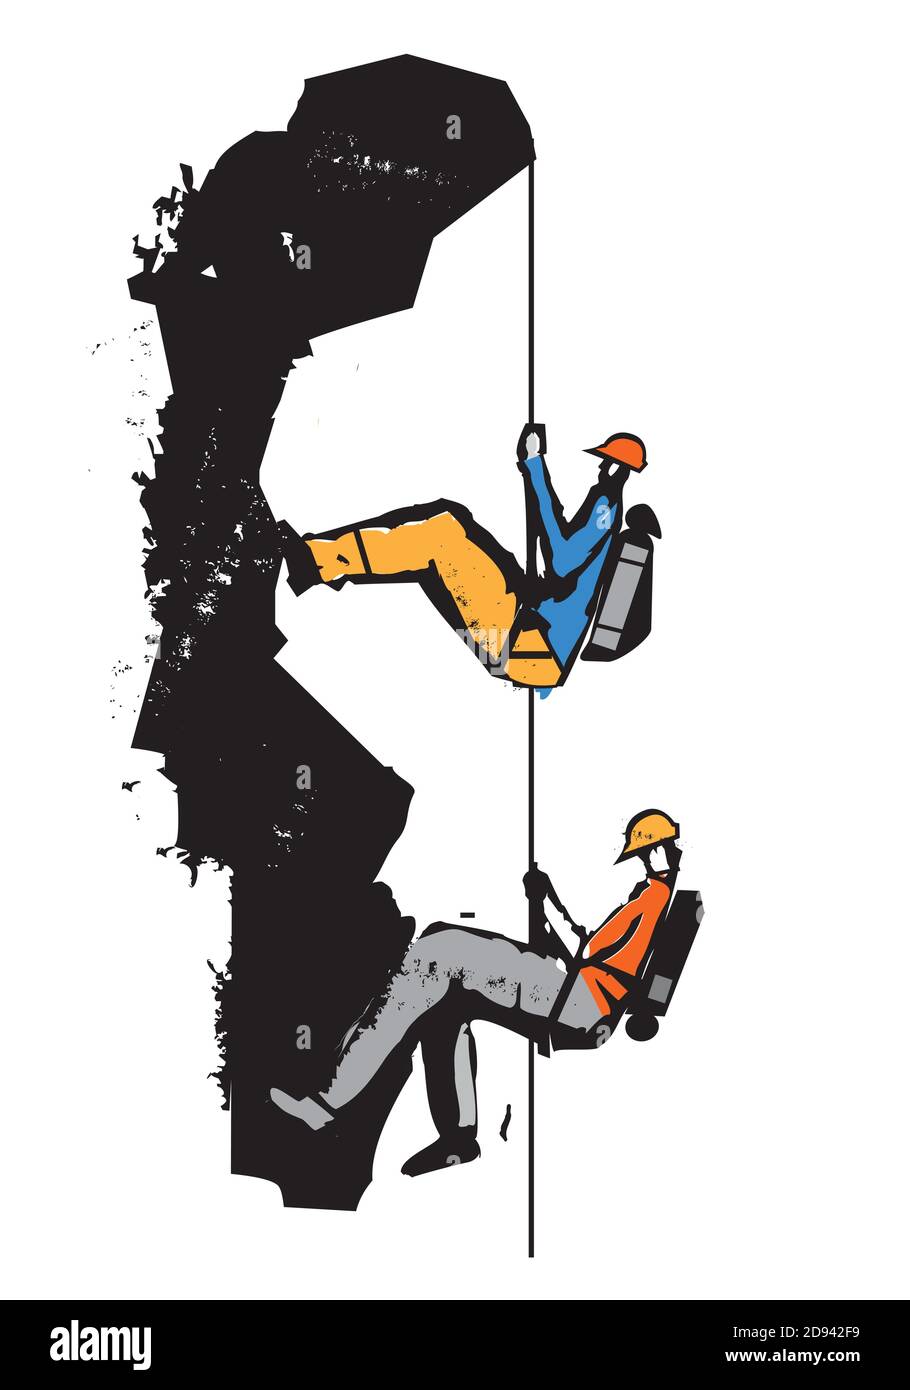 Zwei Kletterer an einem Seil, Karikatur. Illustration von Kletterern in den Felsen. Grunge stilisierte Illustration imitiert Linolschnitt. Vektor verfügbar. Stock Vektor